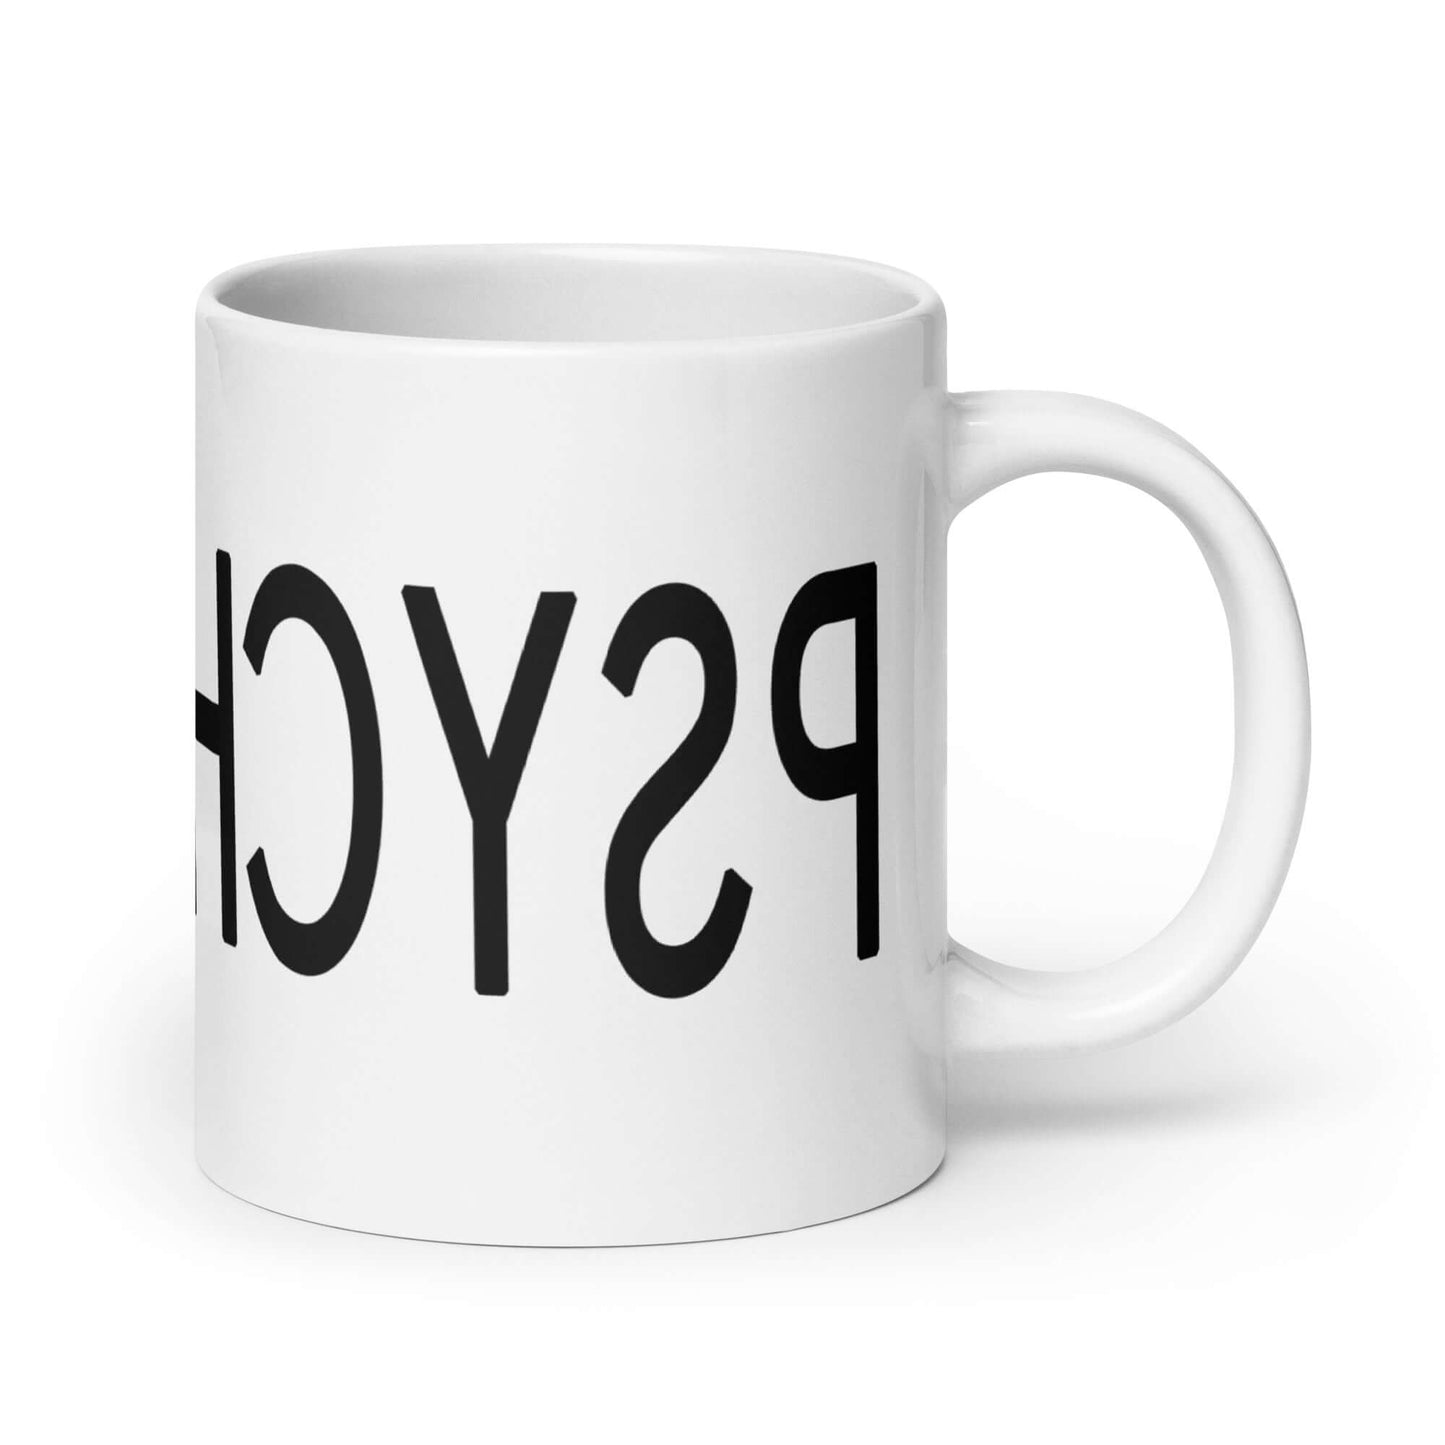 Reverse psychology backward print funny ceramic mug